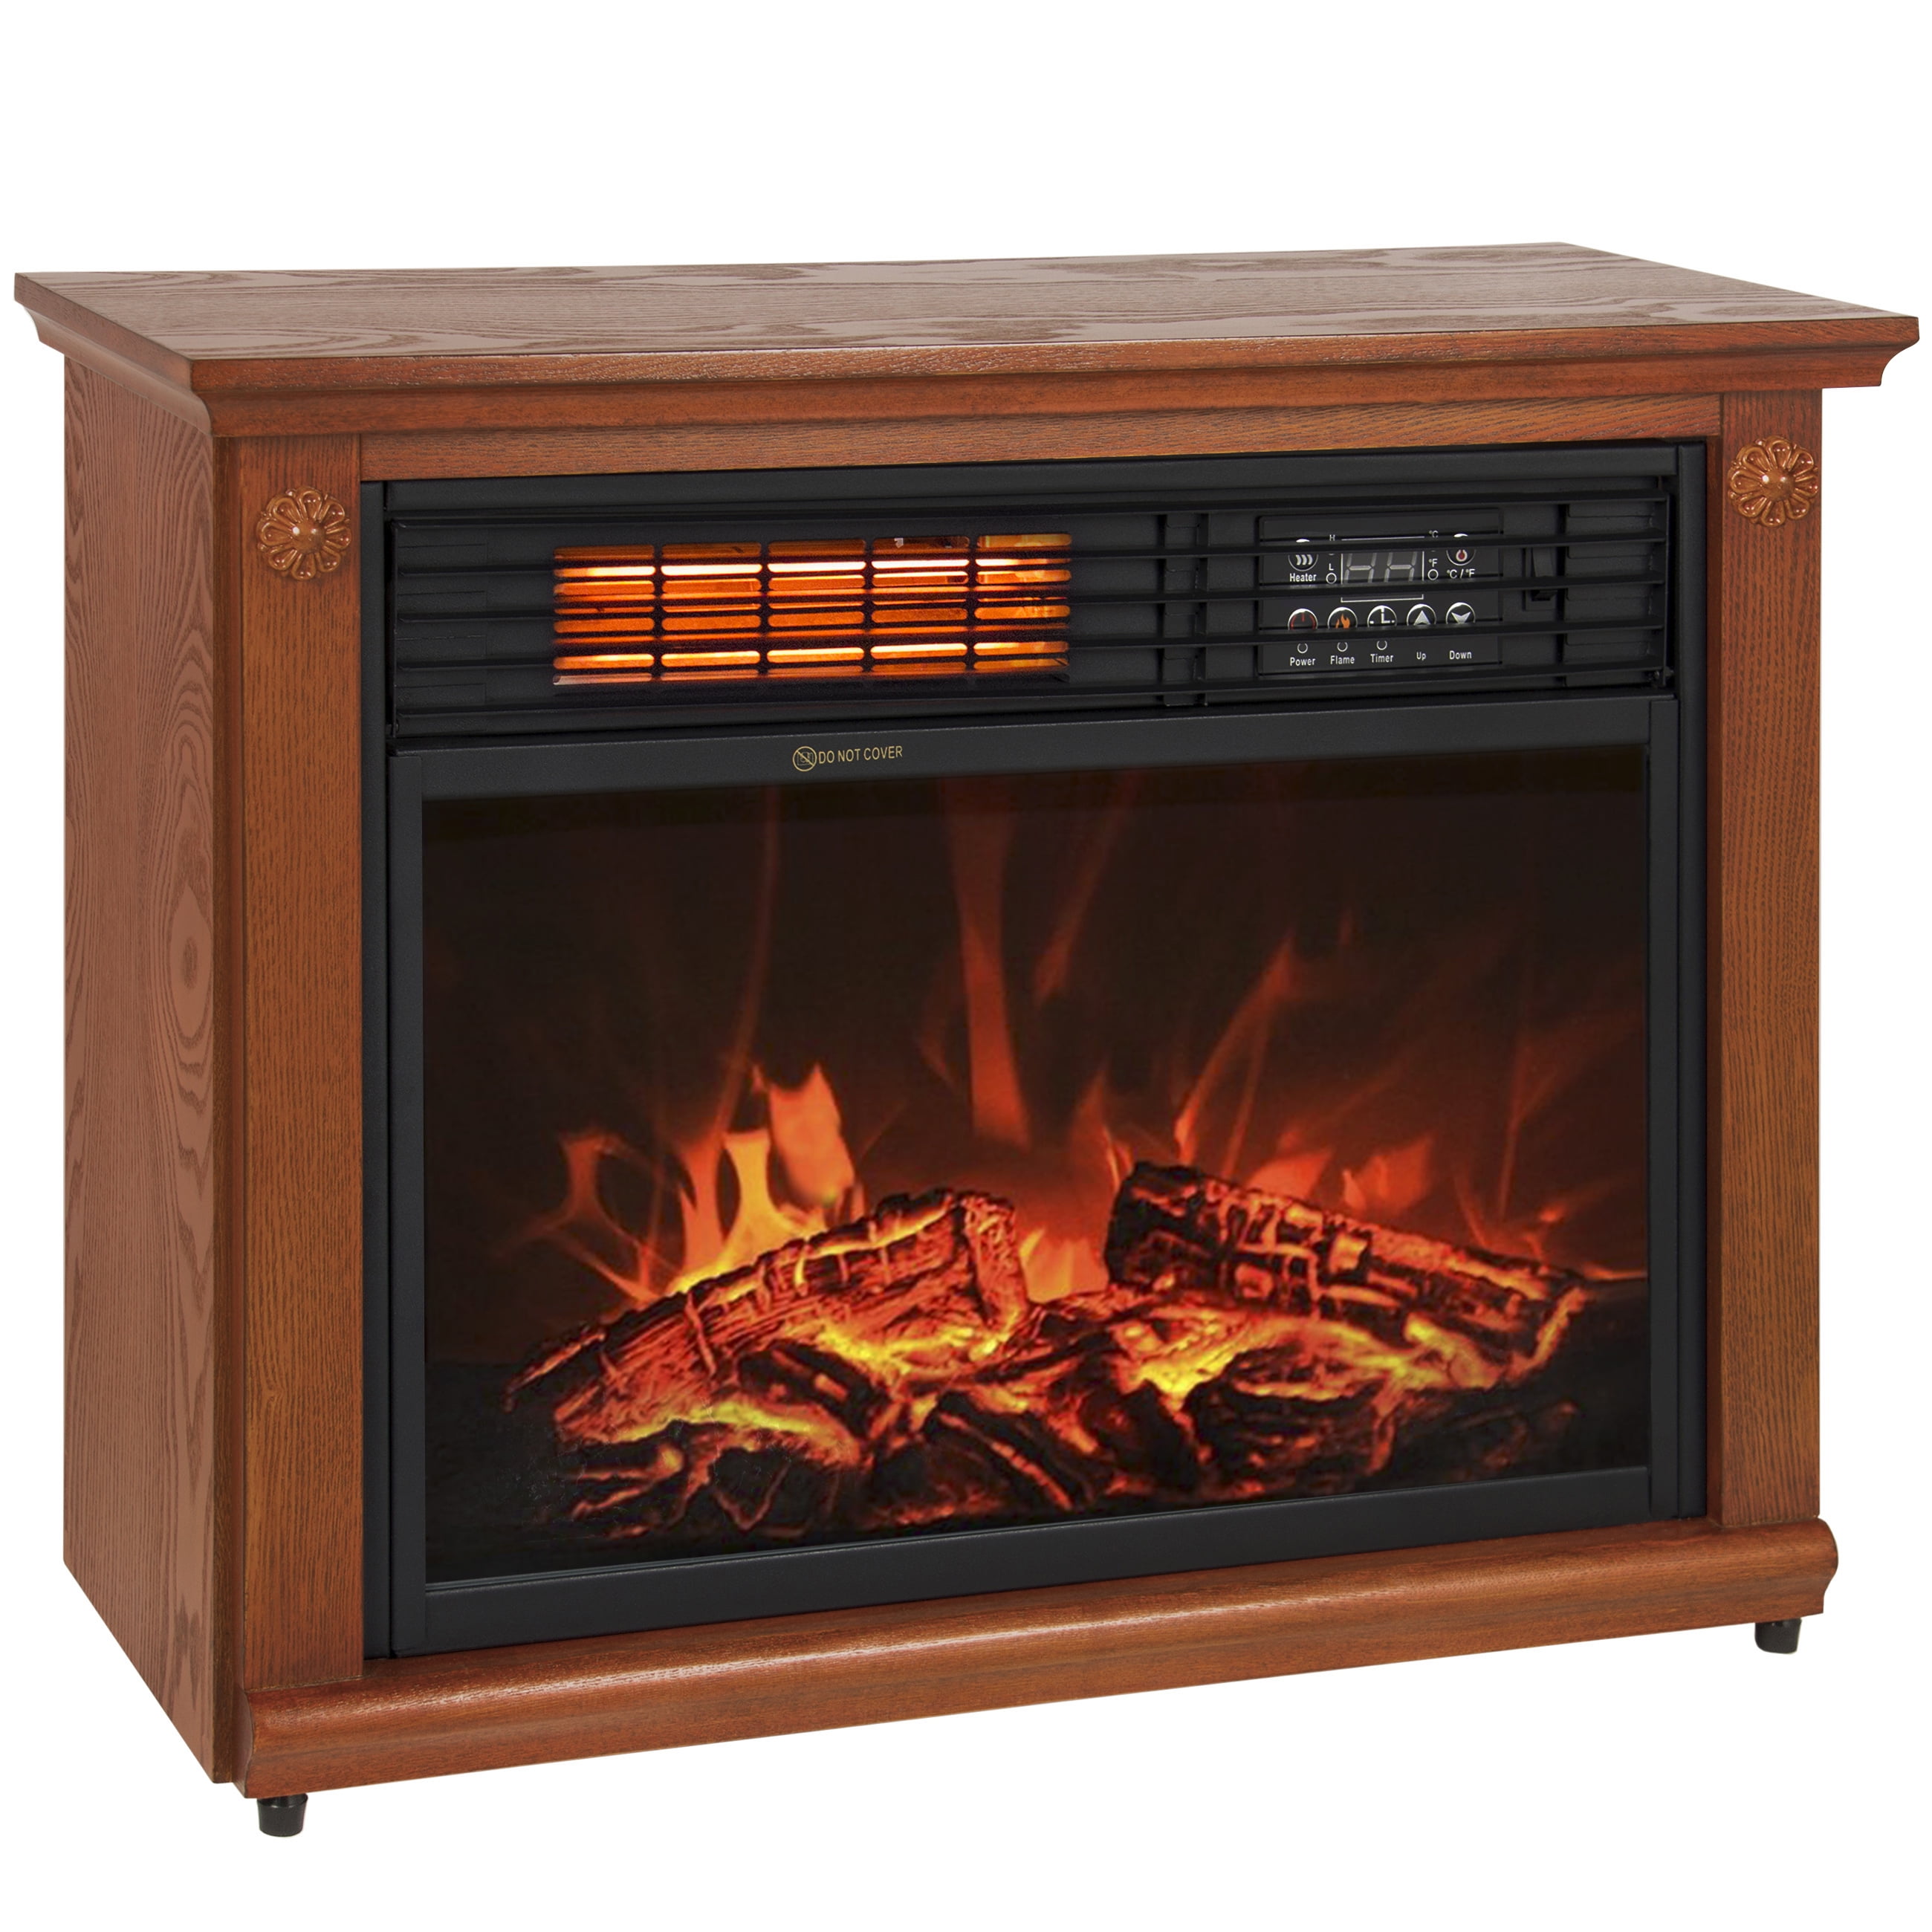 Large Room Infrared Quartz Electric Fireplace Heater Honey Oak Finish